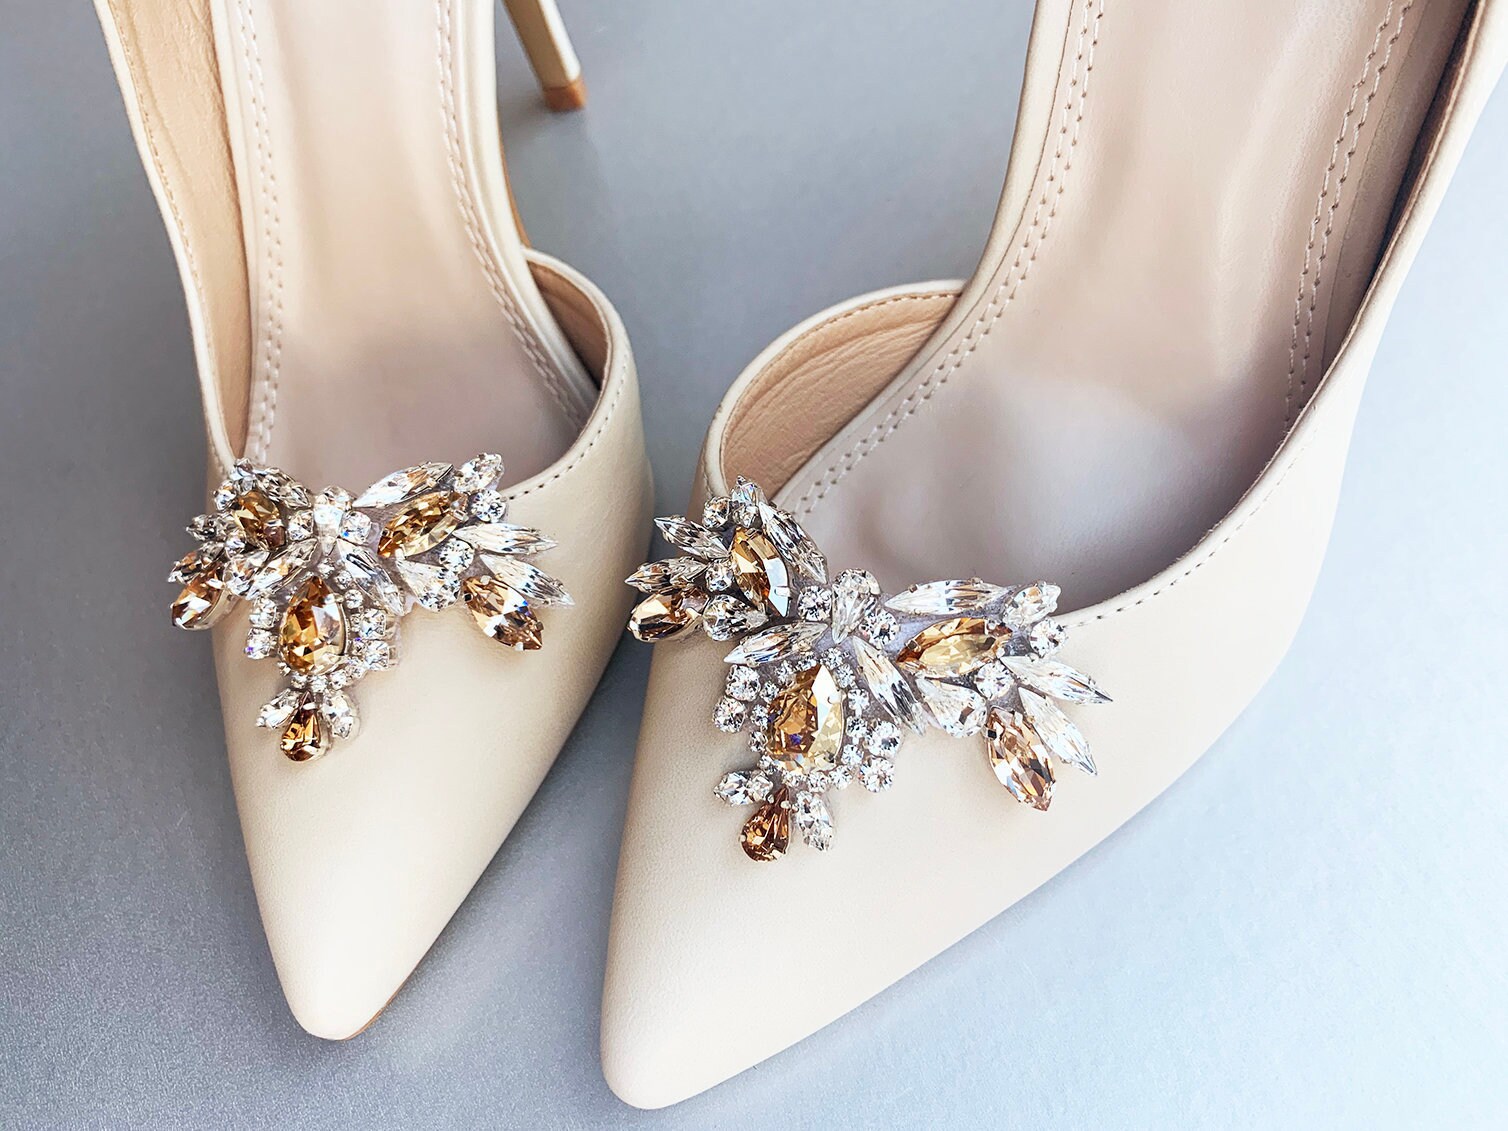 2x Rhinestone Crystal Sparkle Shoe Clips Vintage Wedding Bridal Accessories 